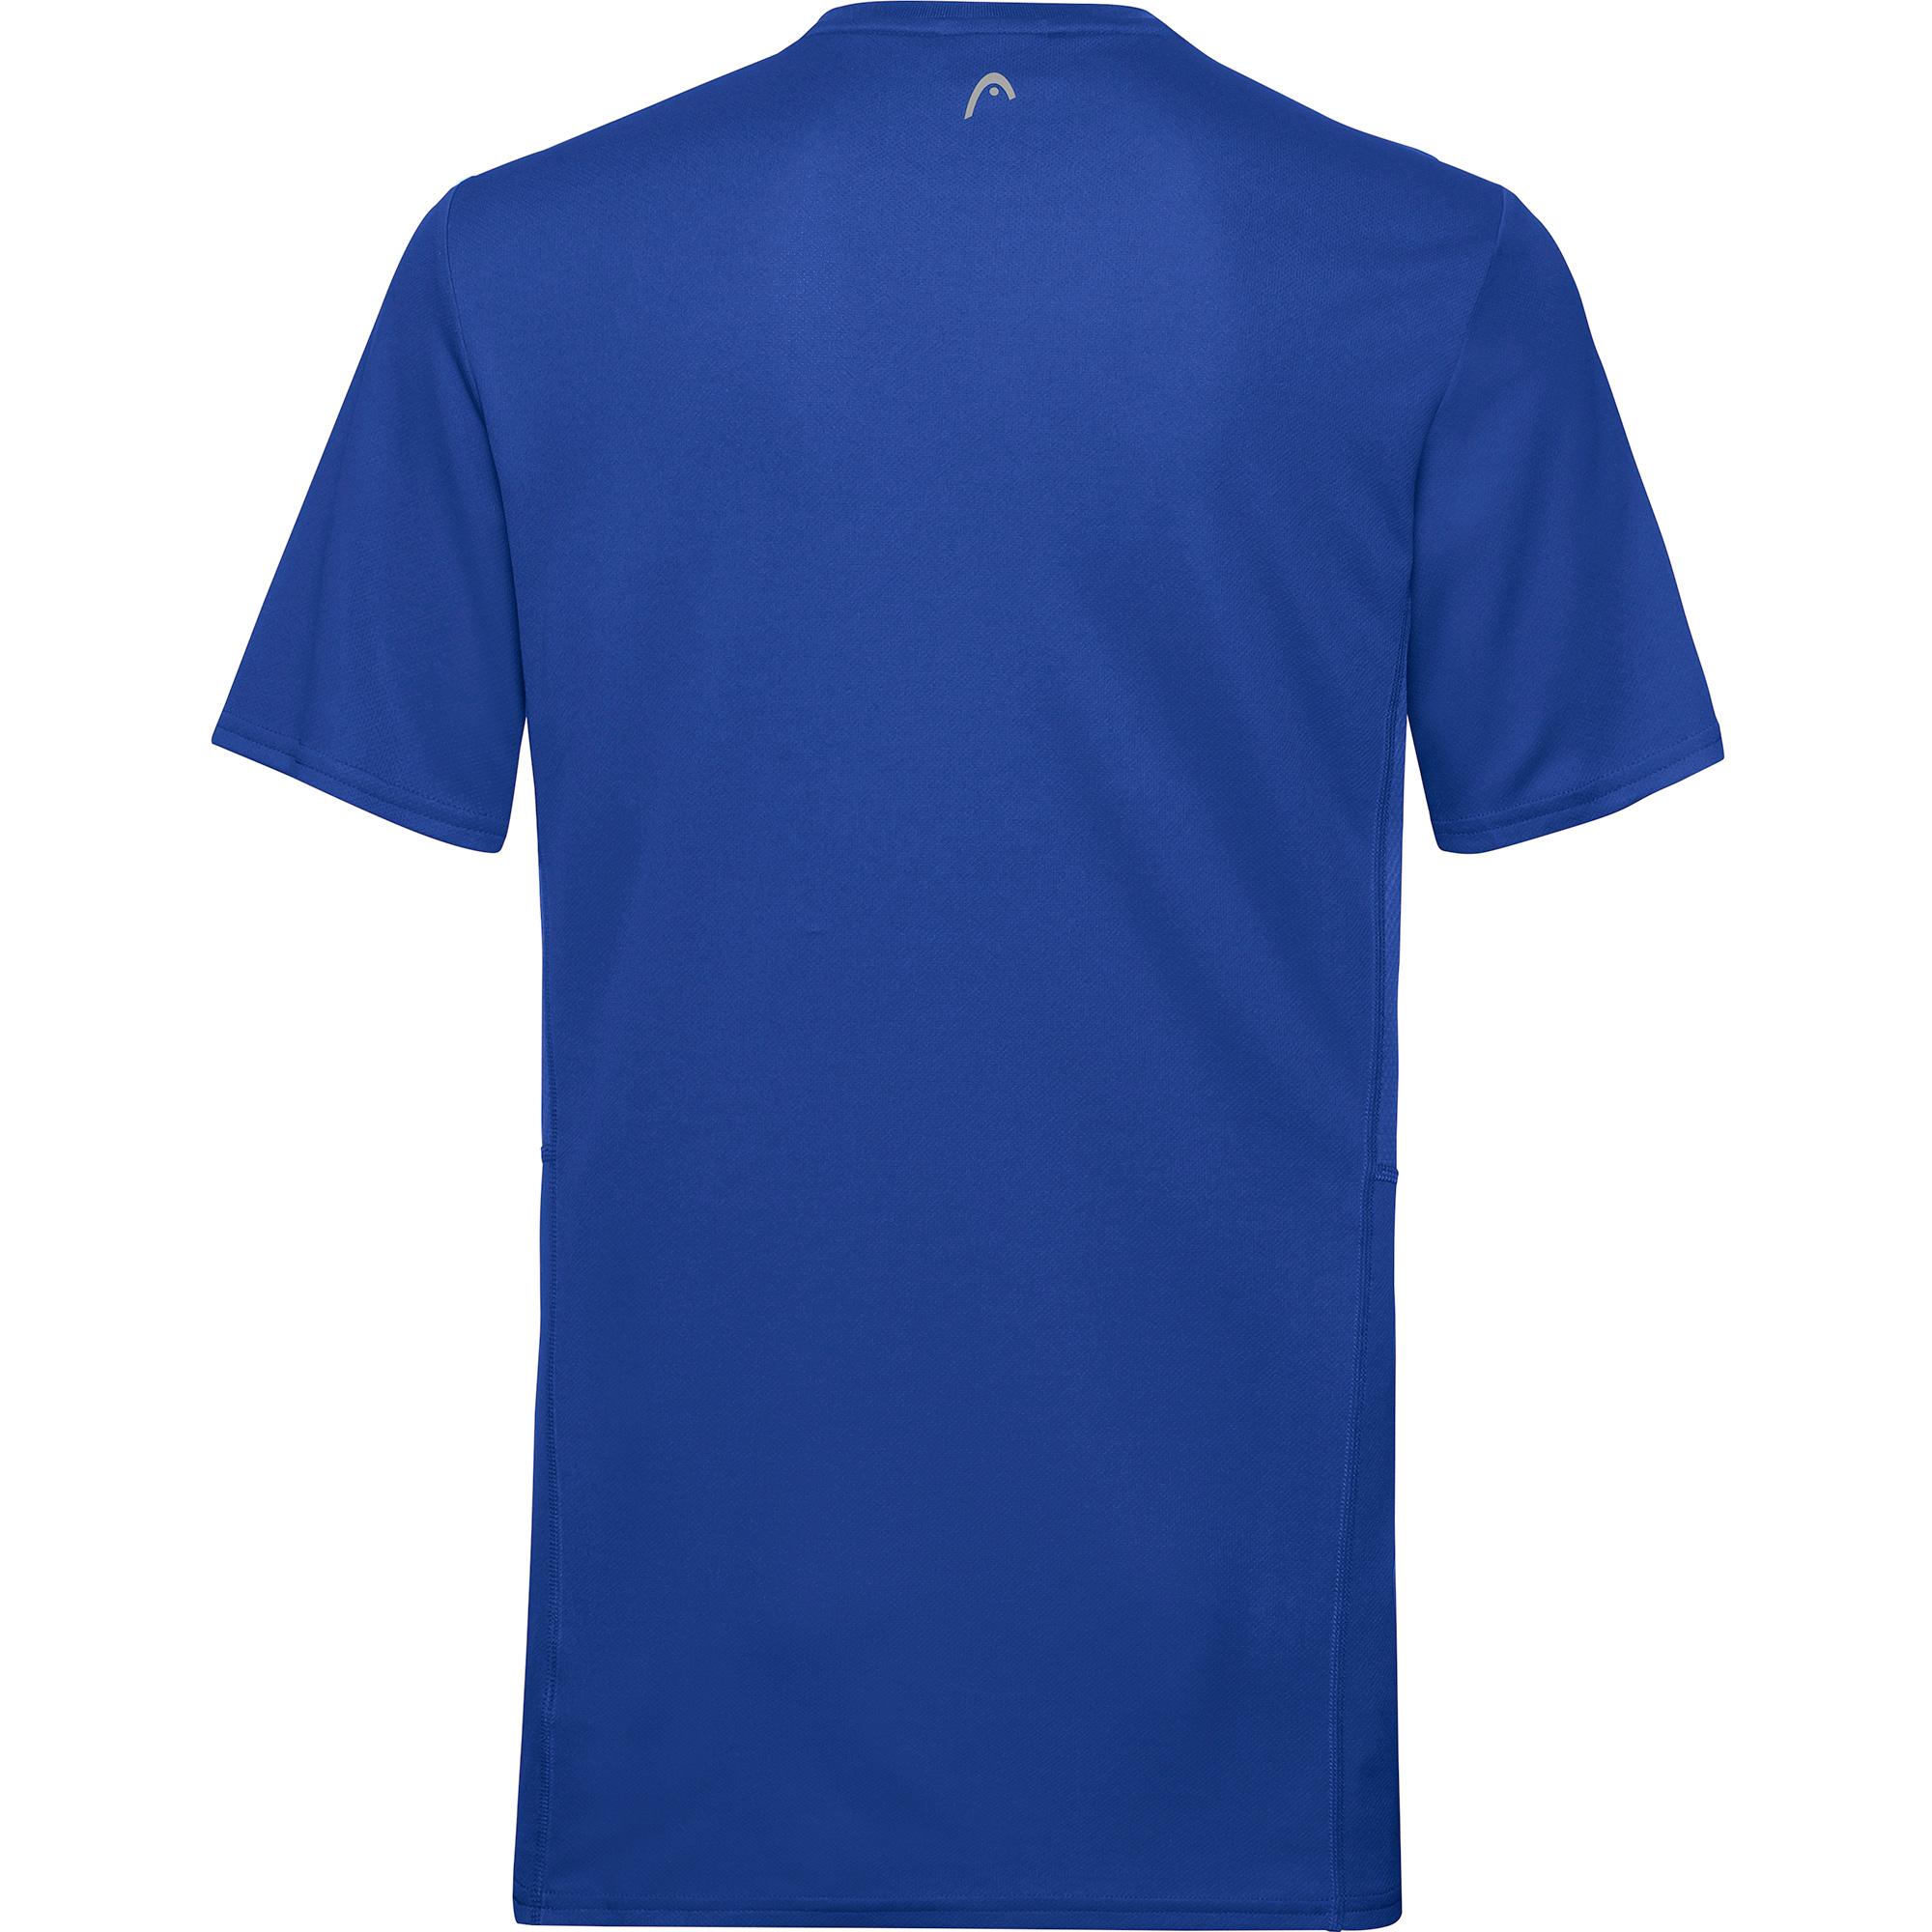 Head Mens Club Tech T-Shirt - Royal Blue - Tennisnuts.com